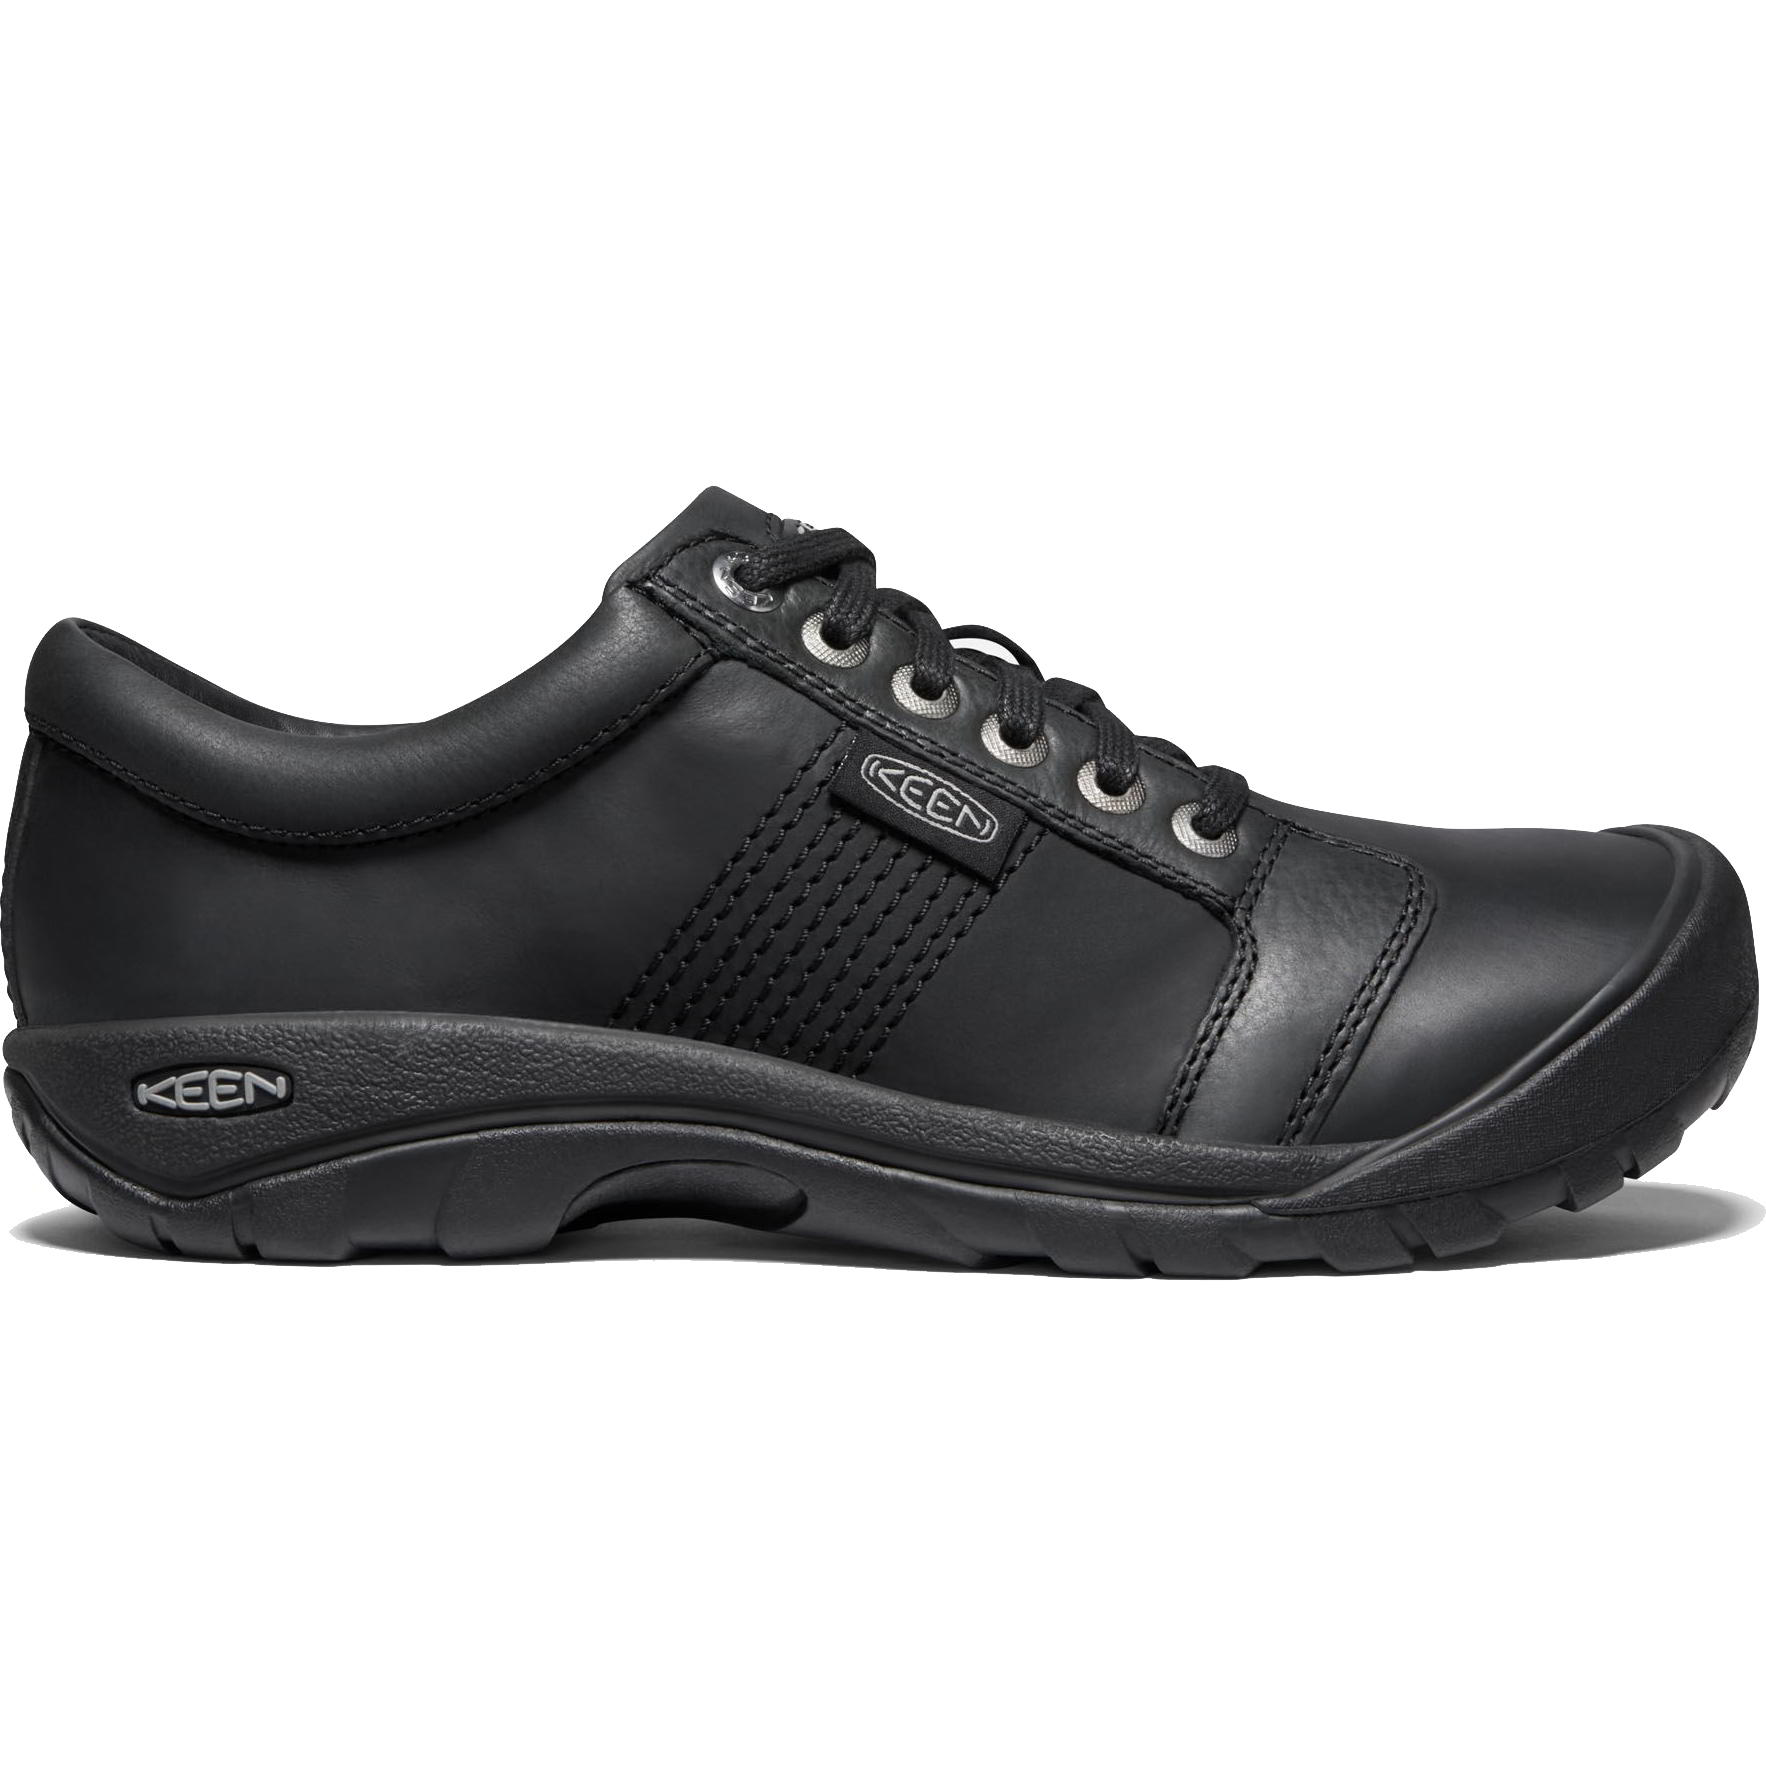 Keen Men's Austin Casual Walking Hiking Shoes - UK 12